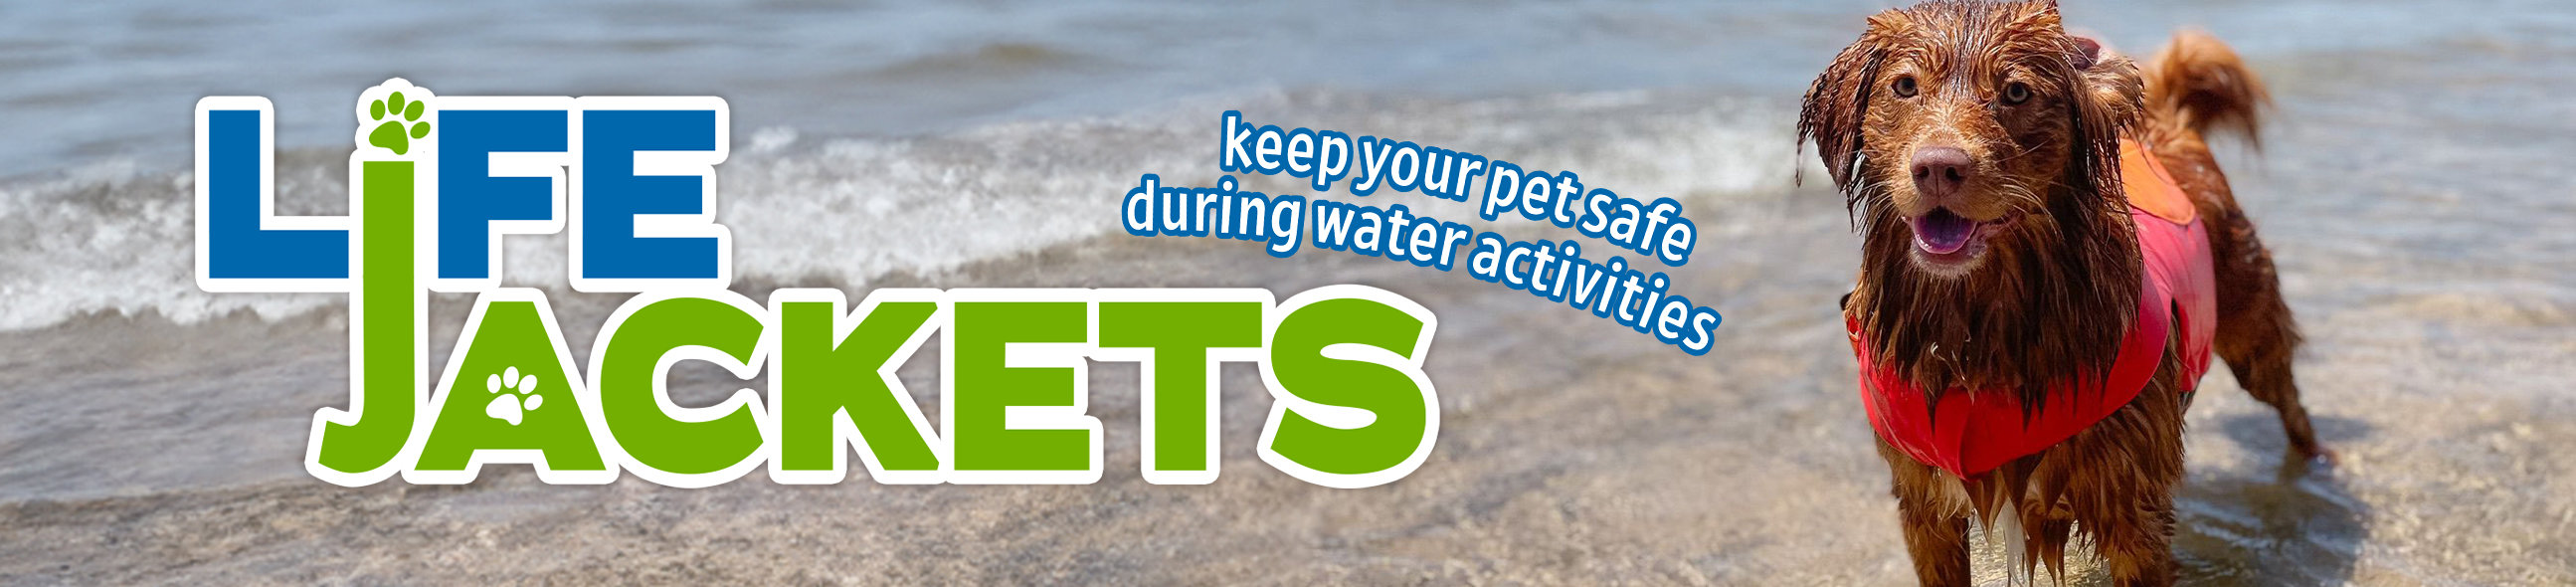 Life Jackets - Keep your pet safe during water activities